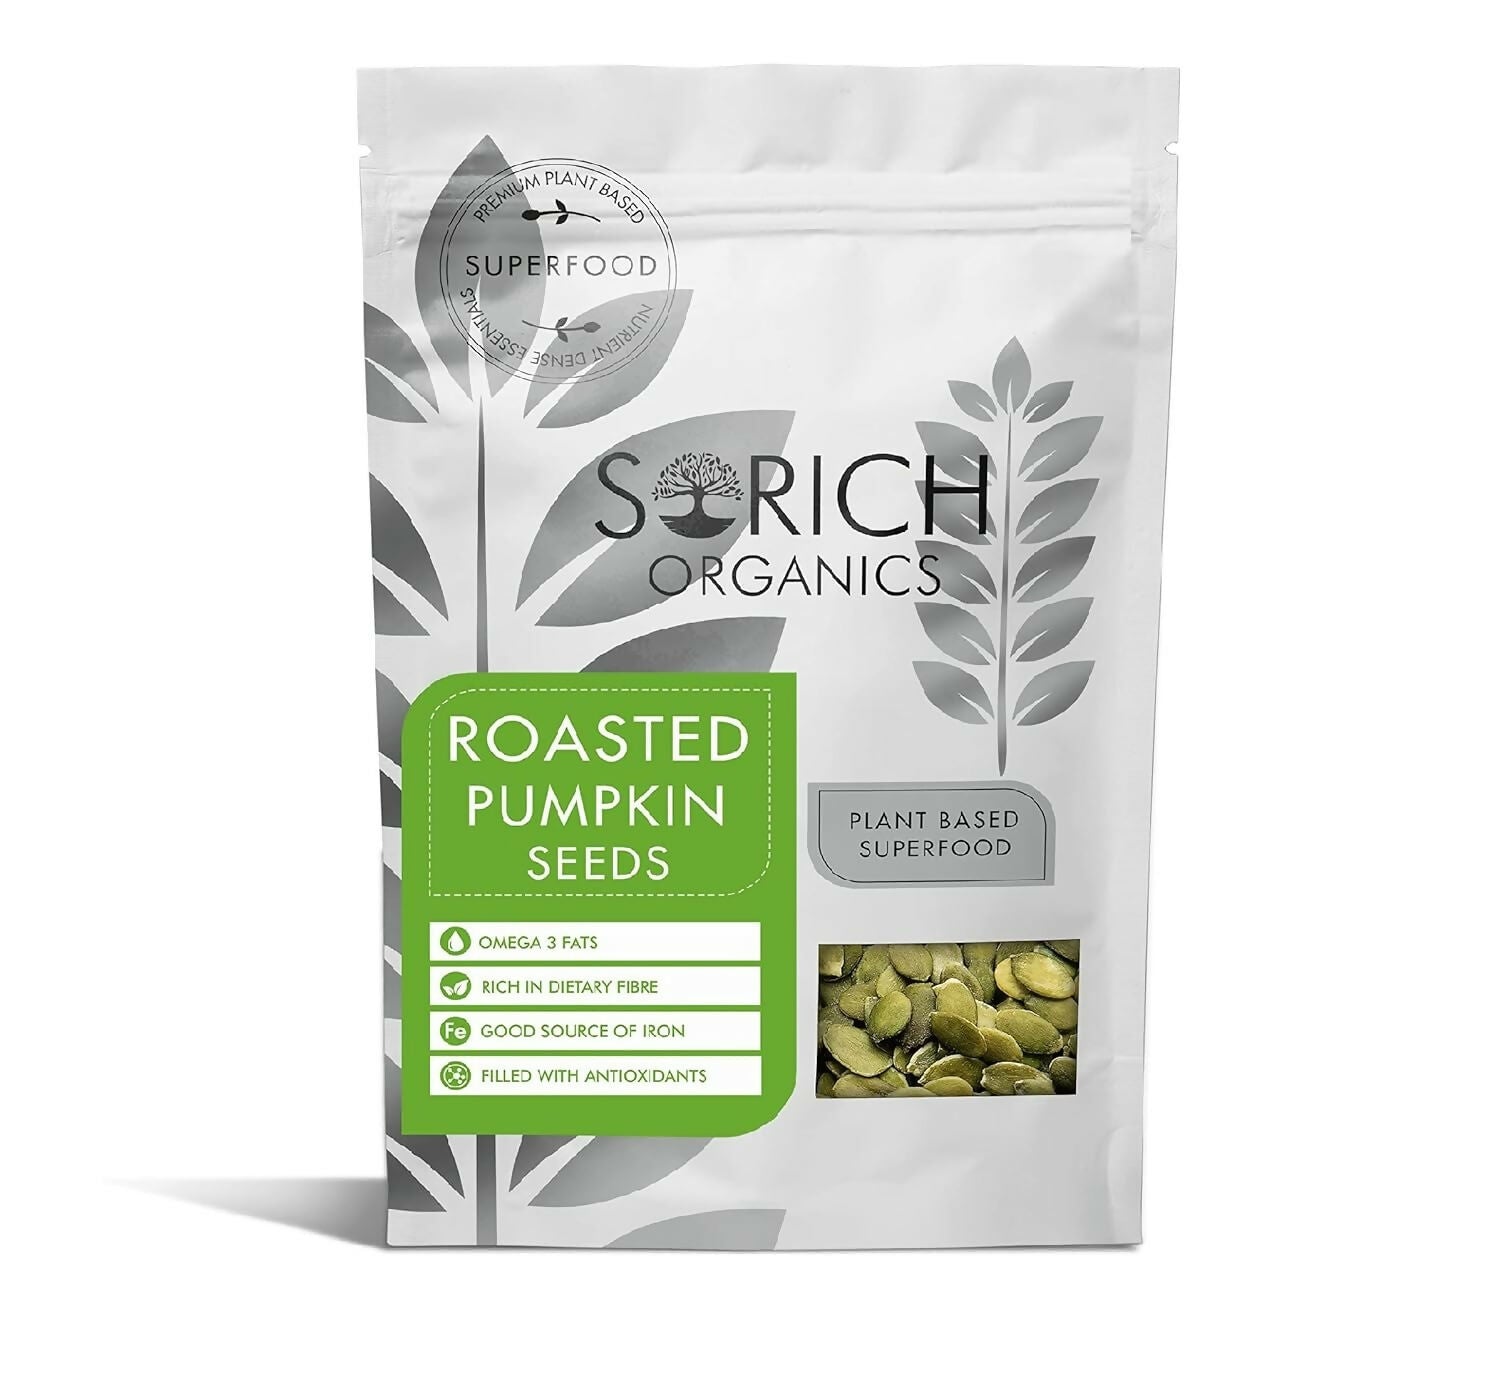 Sorich Organics Roasted Pumpkin Seeds - BUDNE